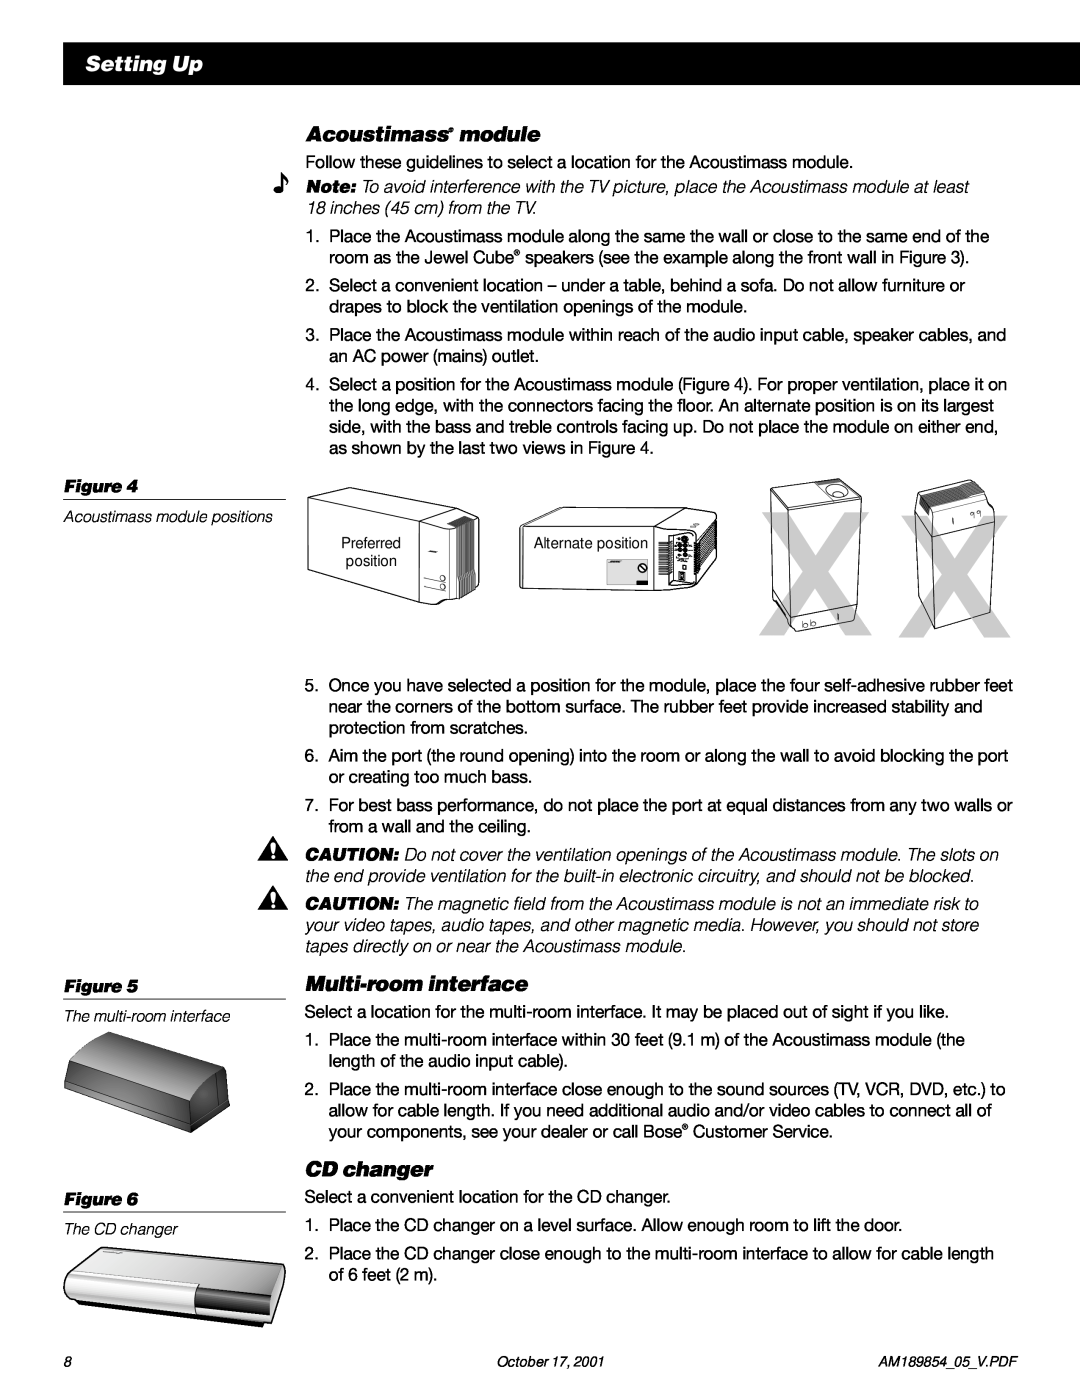 Bose 50 manual Setting Up, Acoustimass module, Multi-roominterface, CD changer 